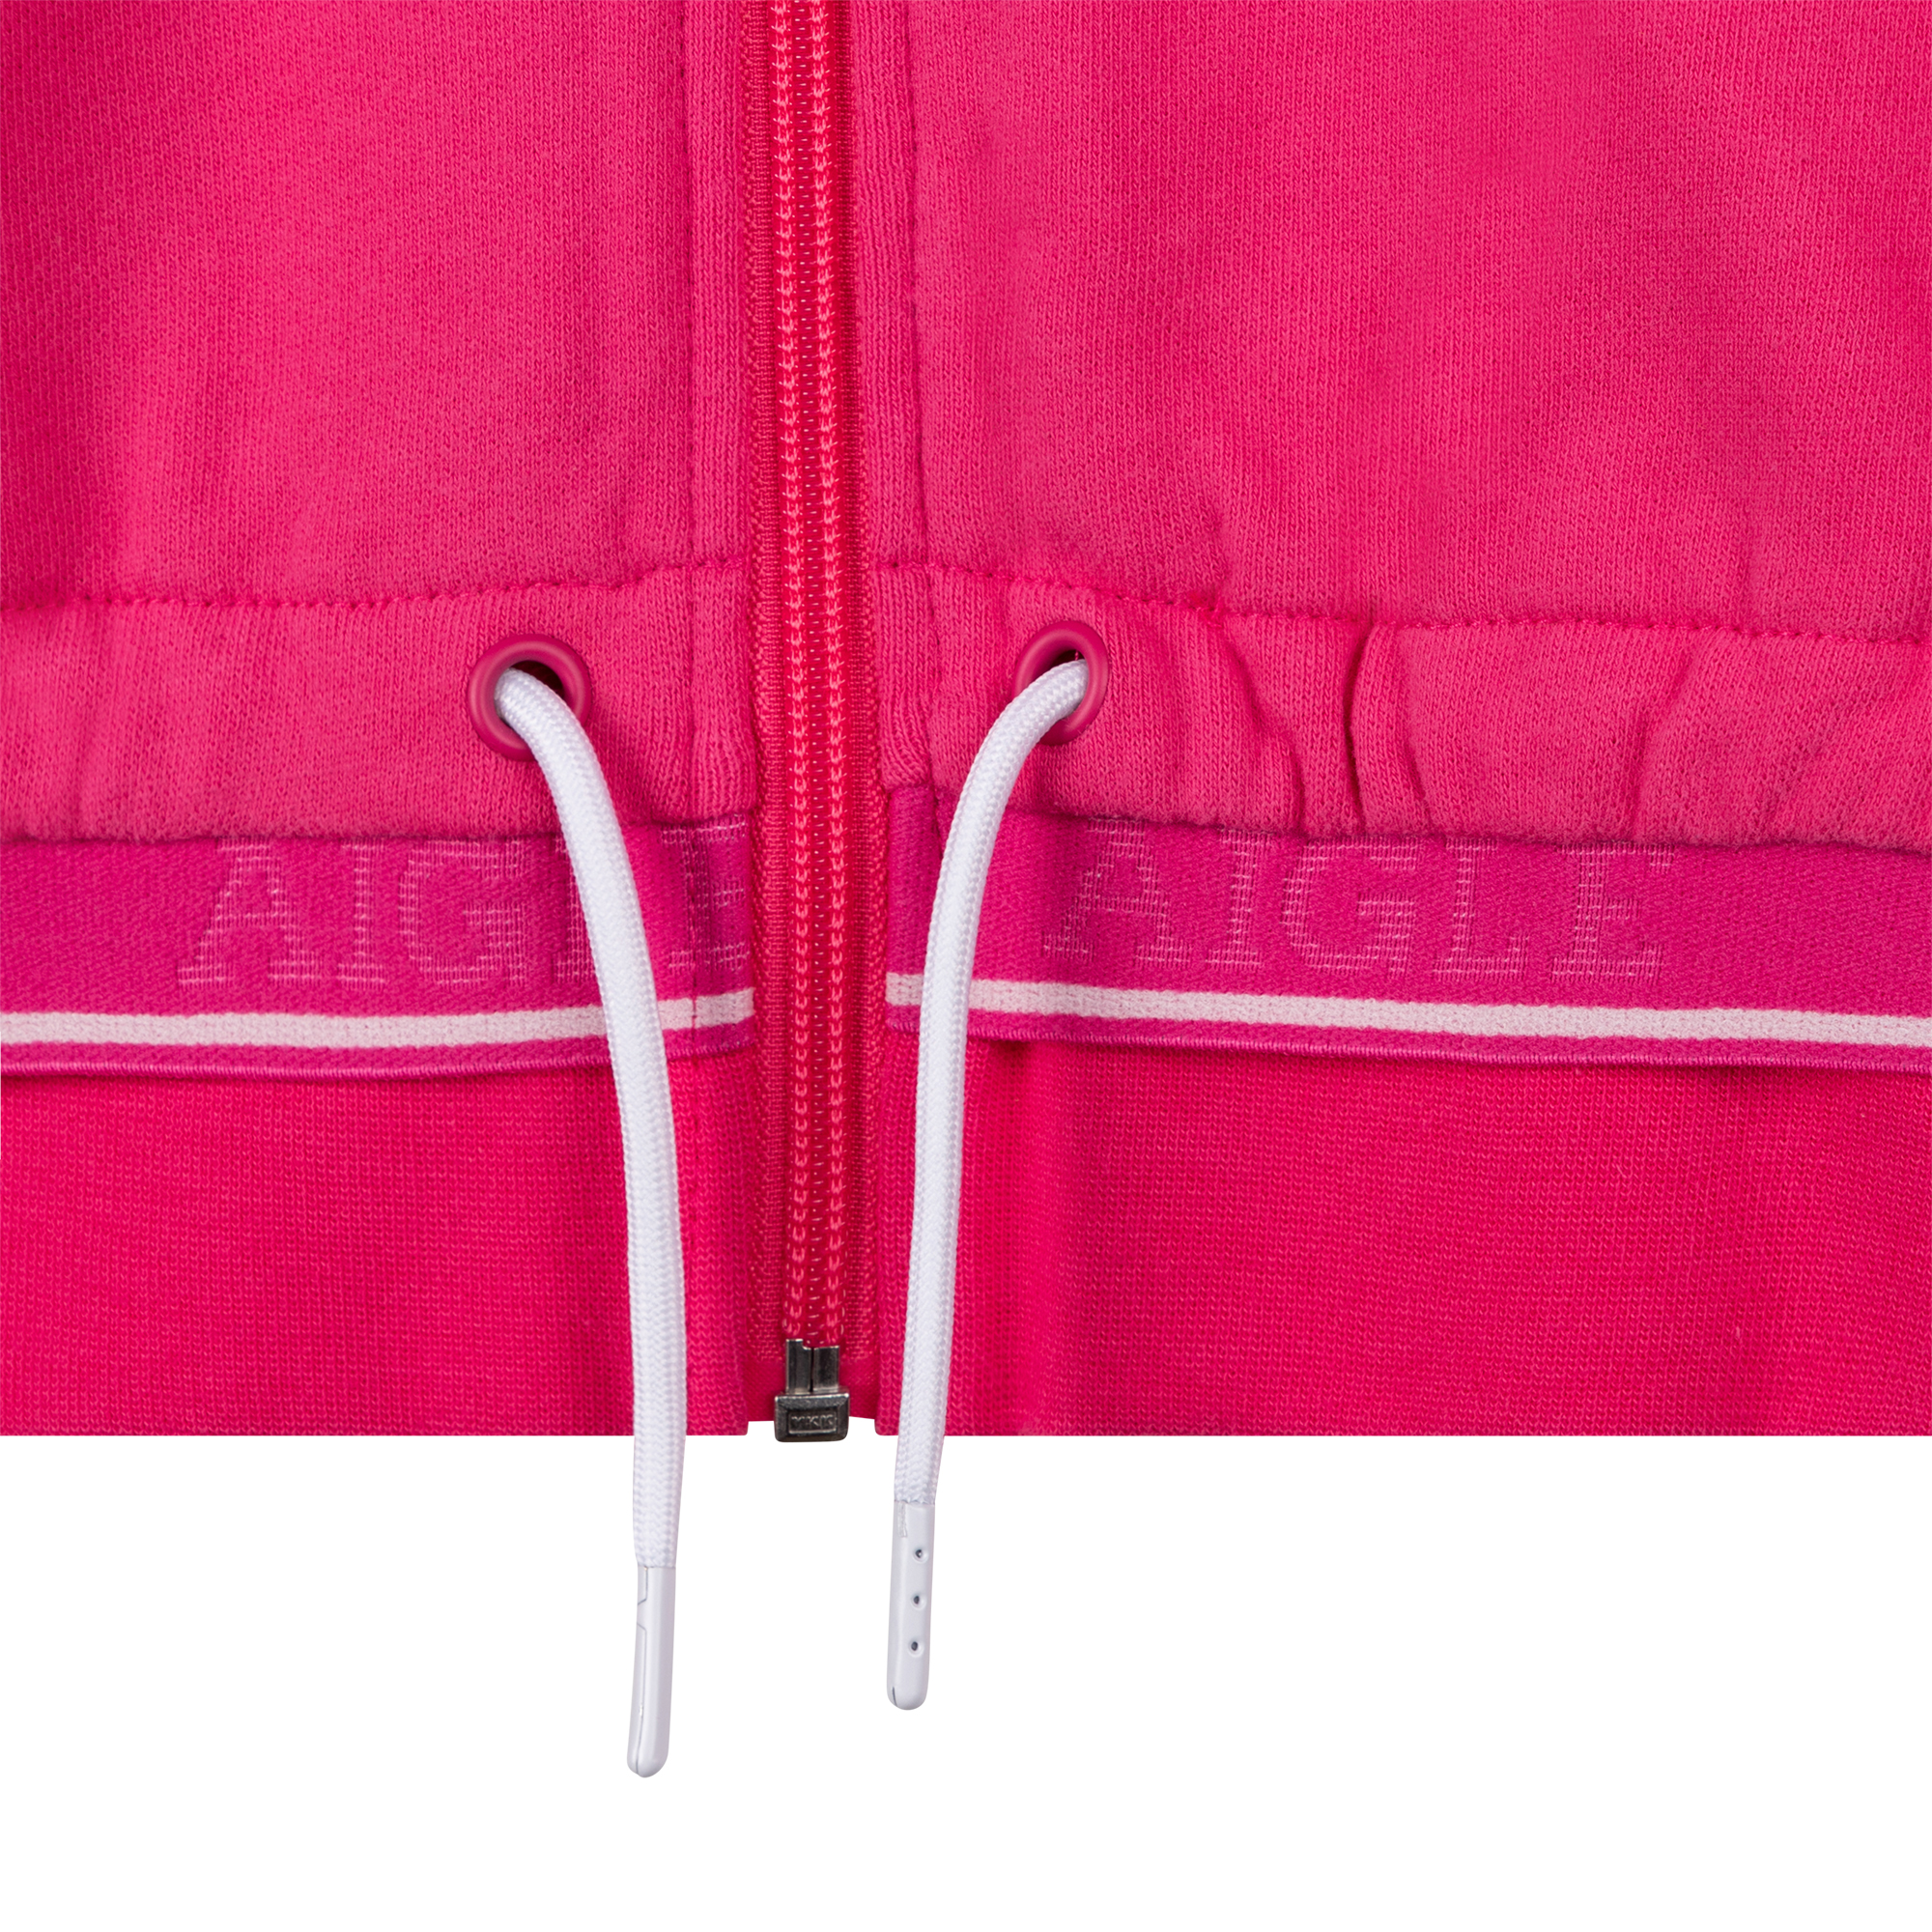 Organic cotton zip-up sweatshirt AIGLE for GIRL